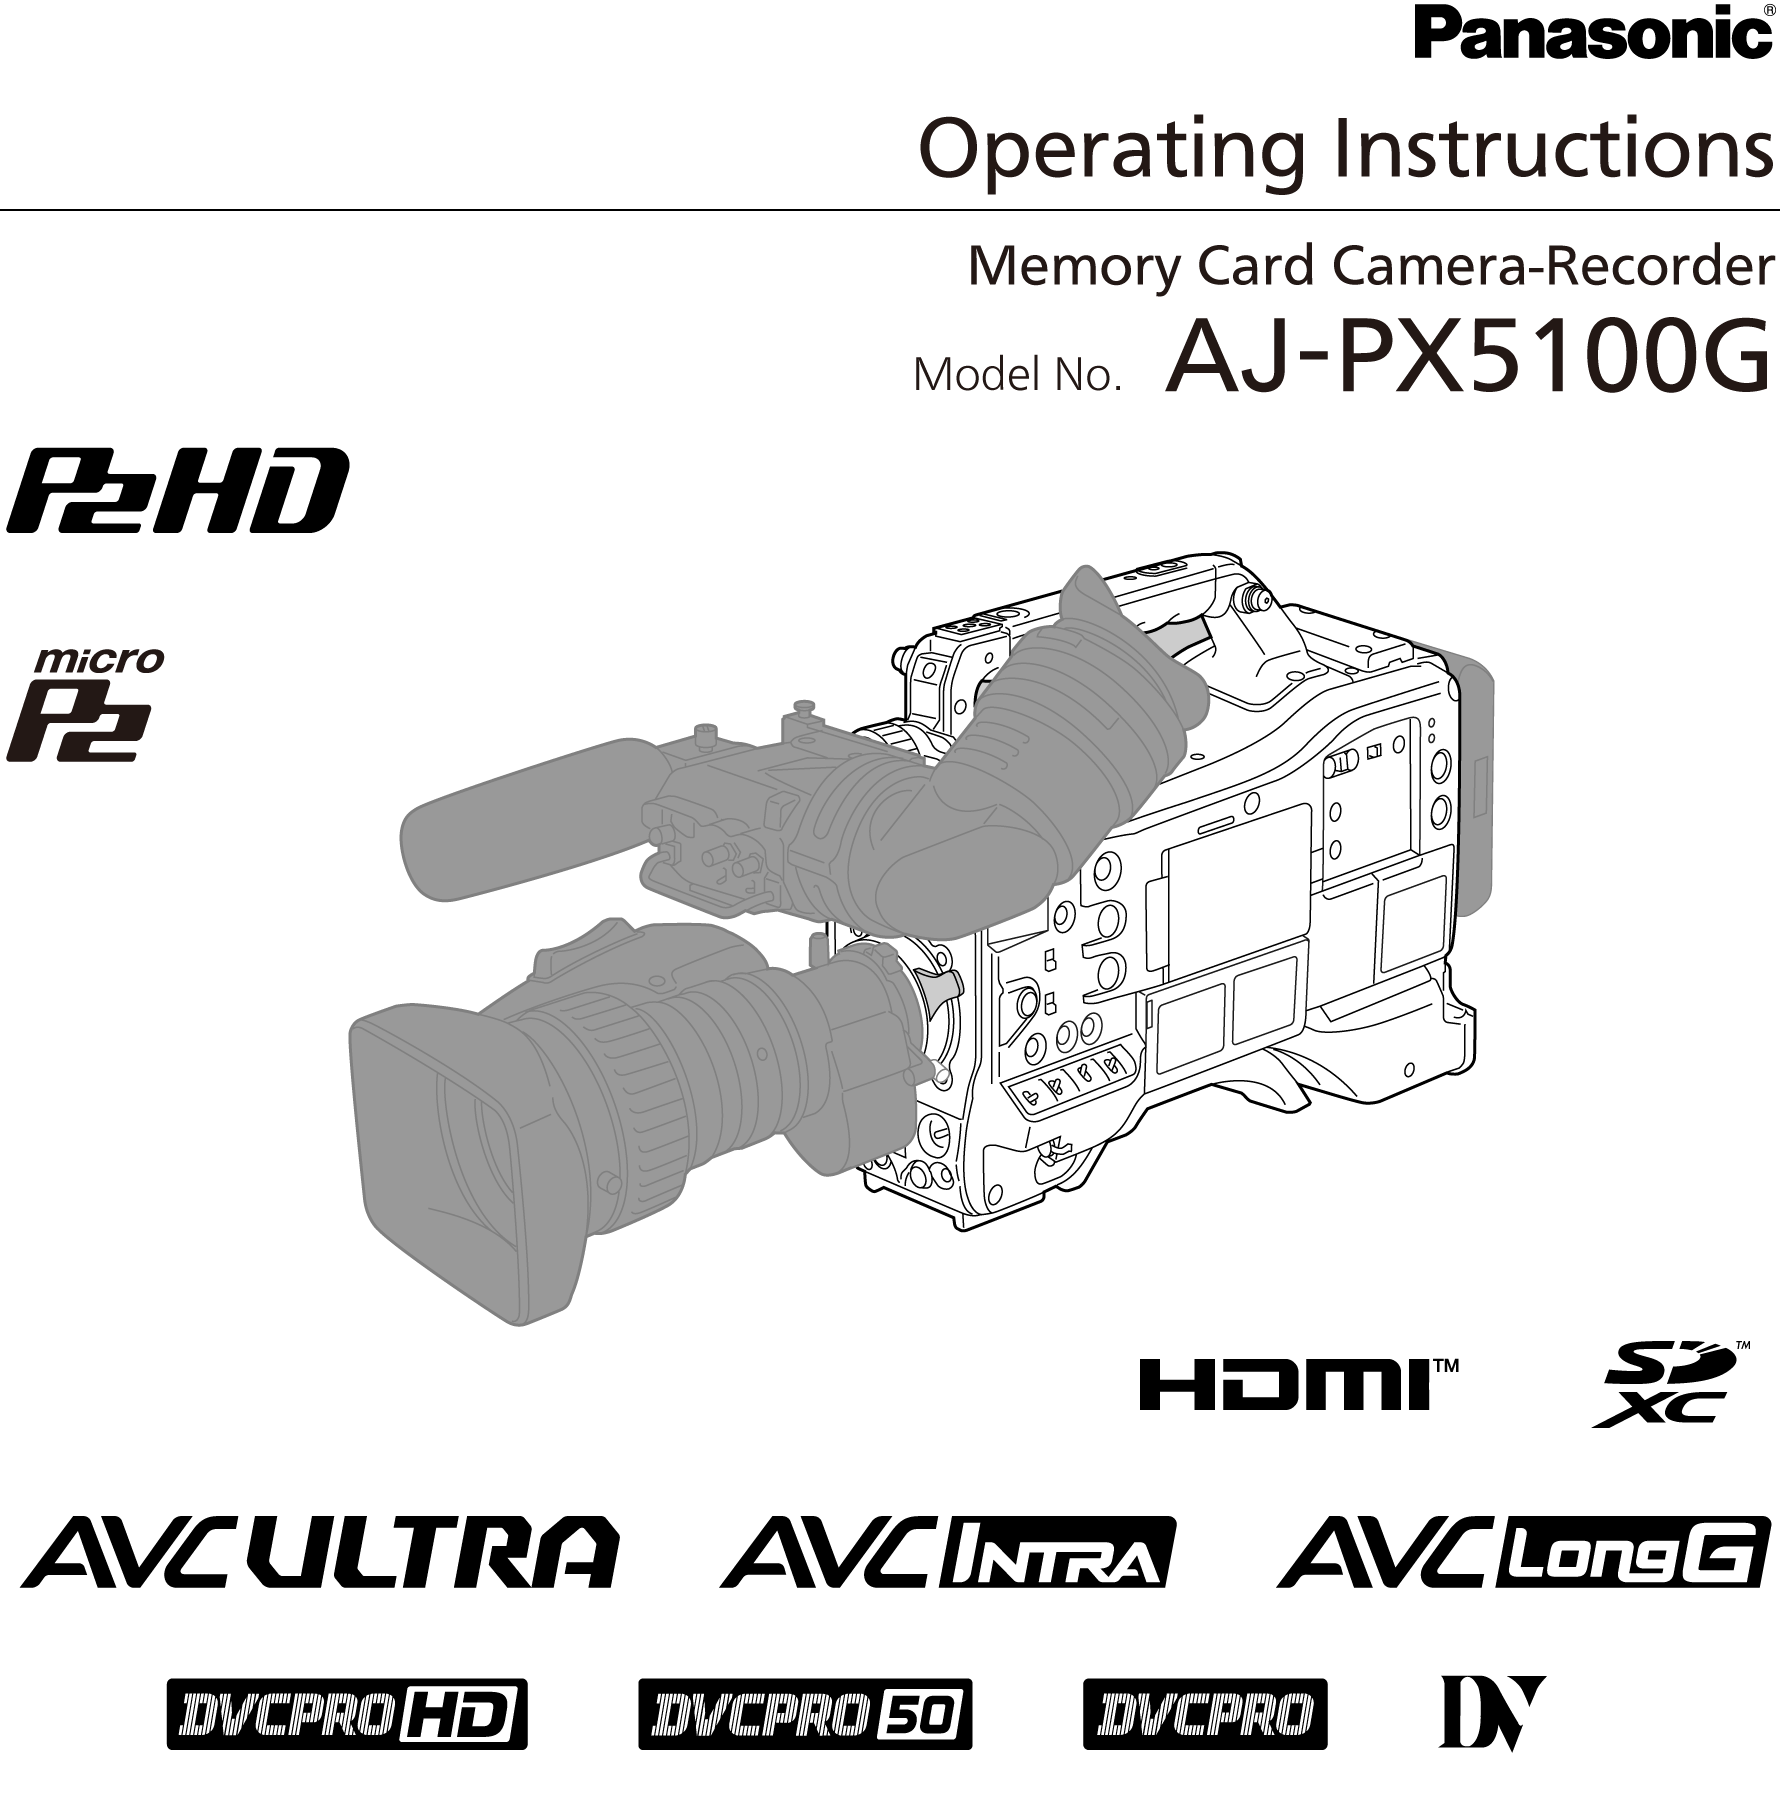 Operating Instructions AJ-PX5100G